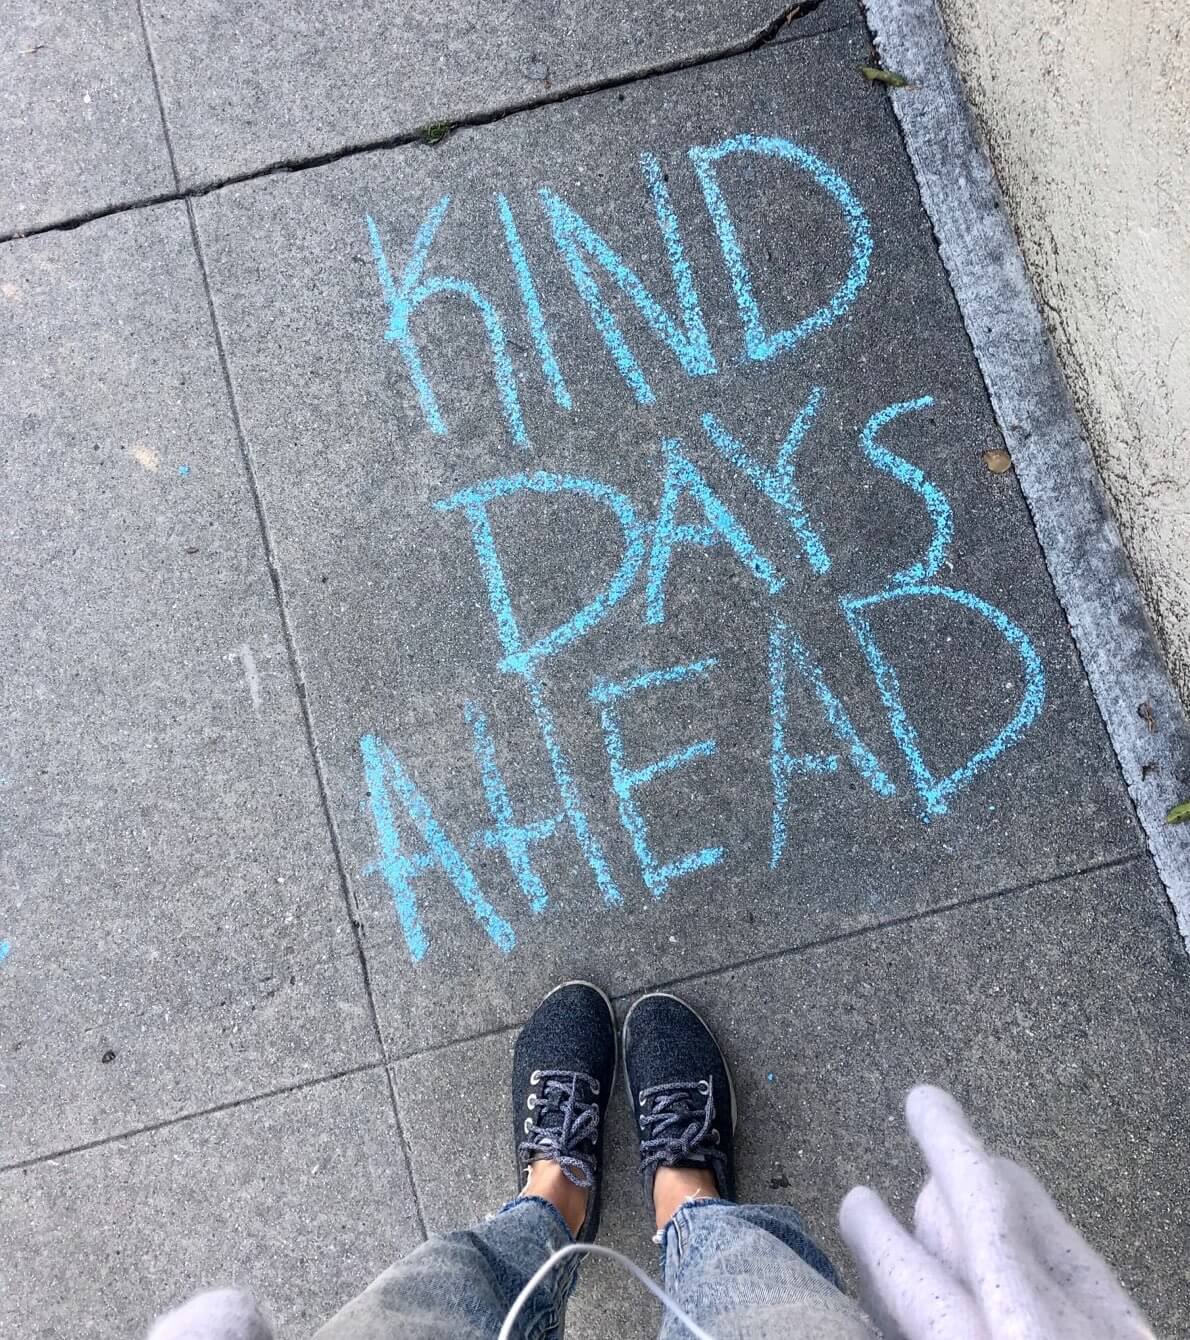 A note written on a sidewalk in chalk that says "Kind days ahead"